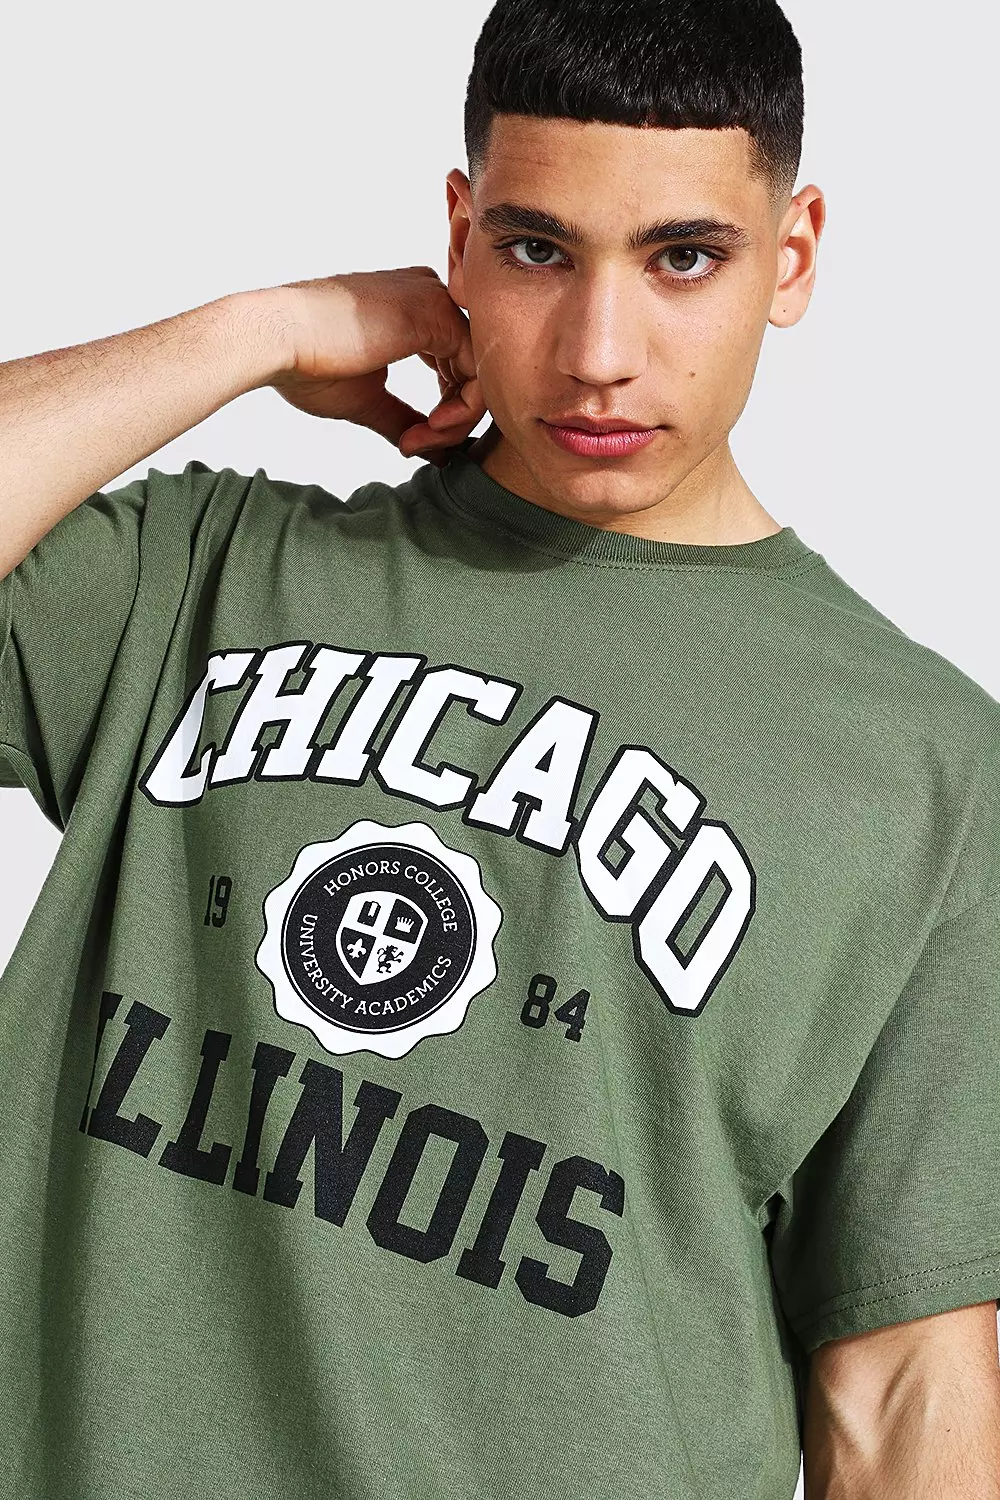 Oversized Chicago Print T-Shirt